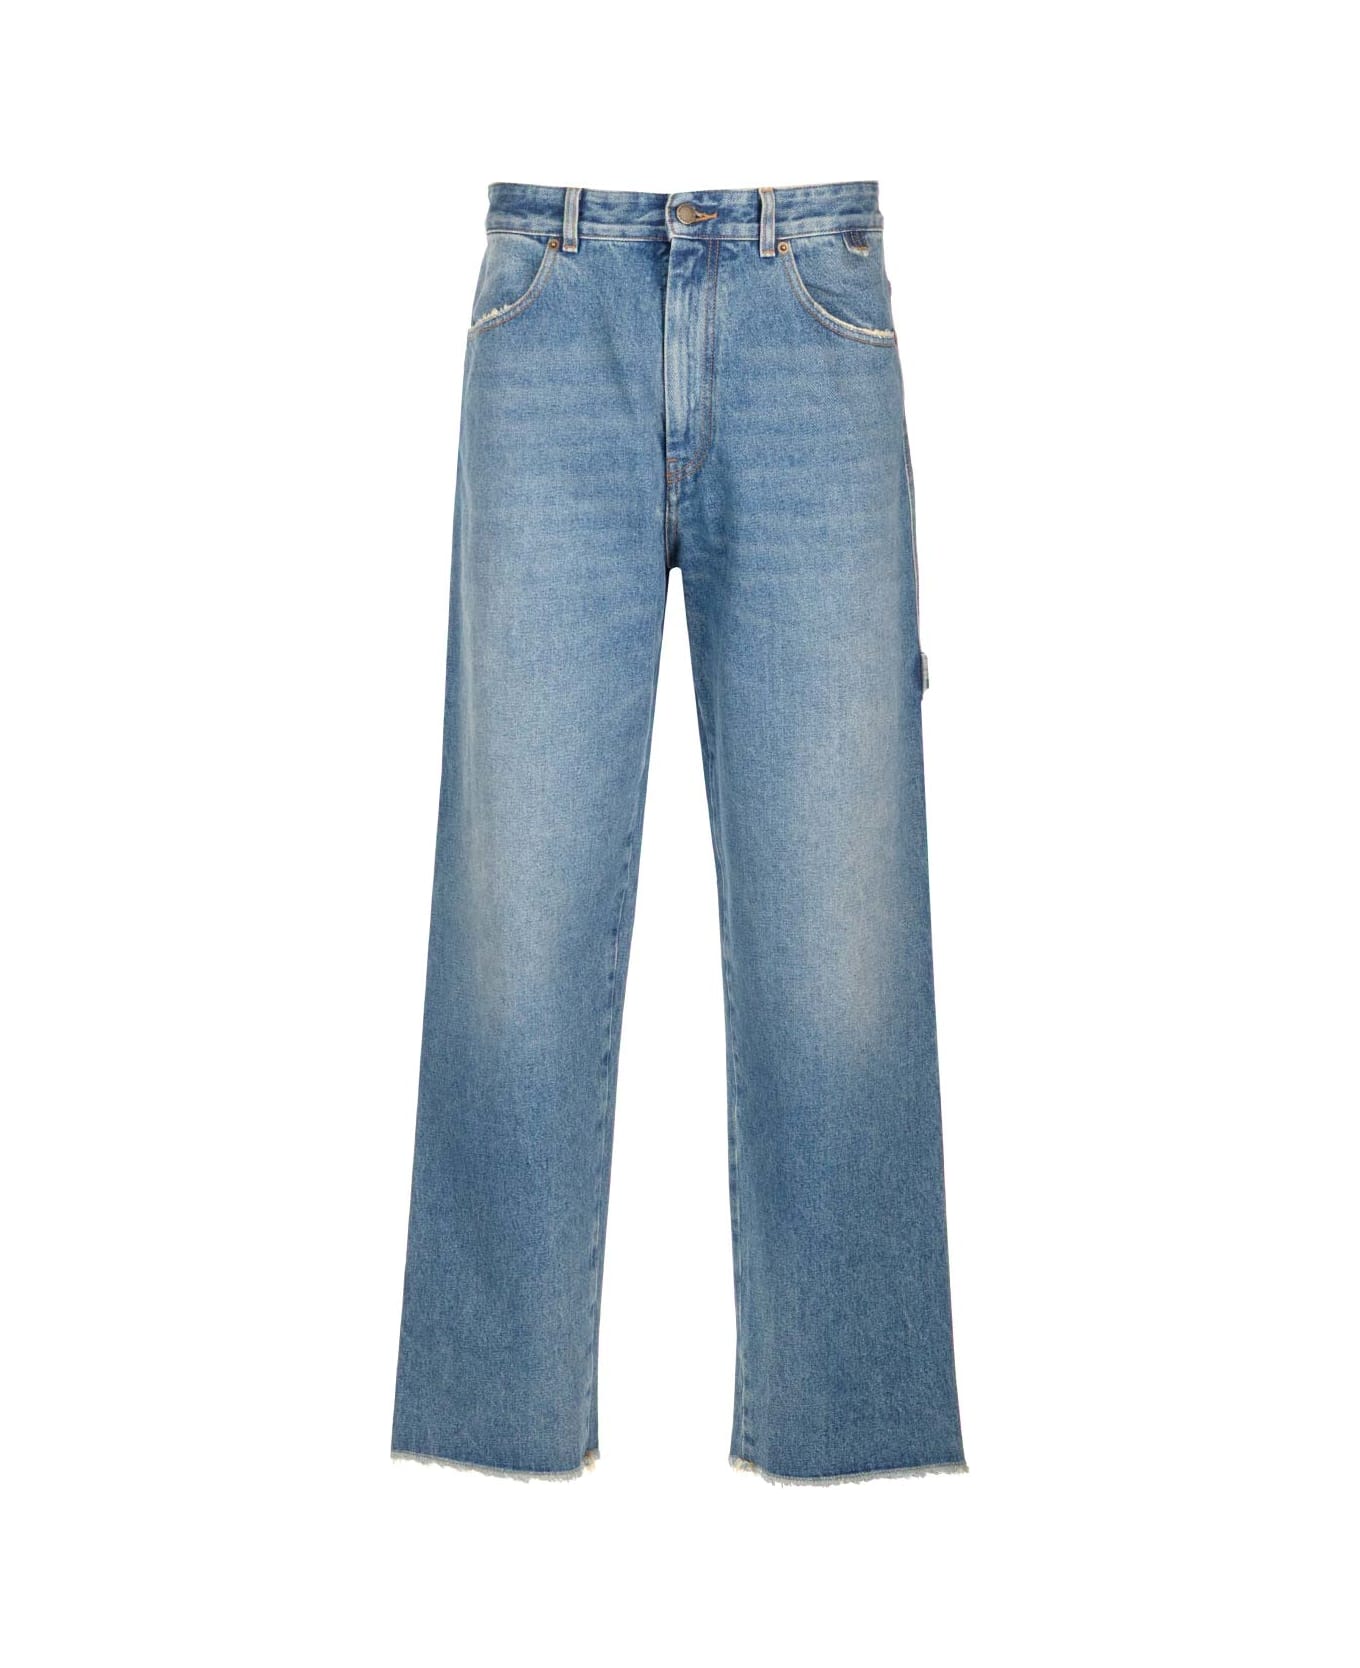 DARKPARK 'john' Carpenter Jeans - Medium Wash